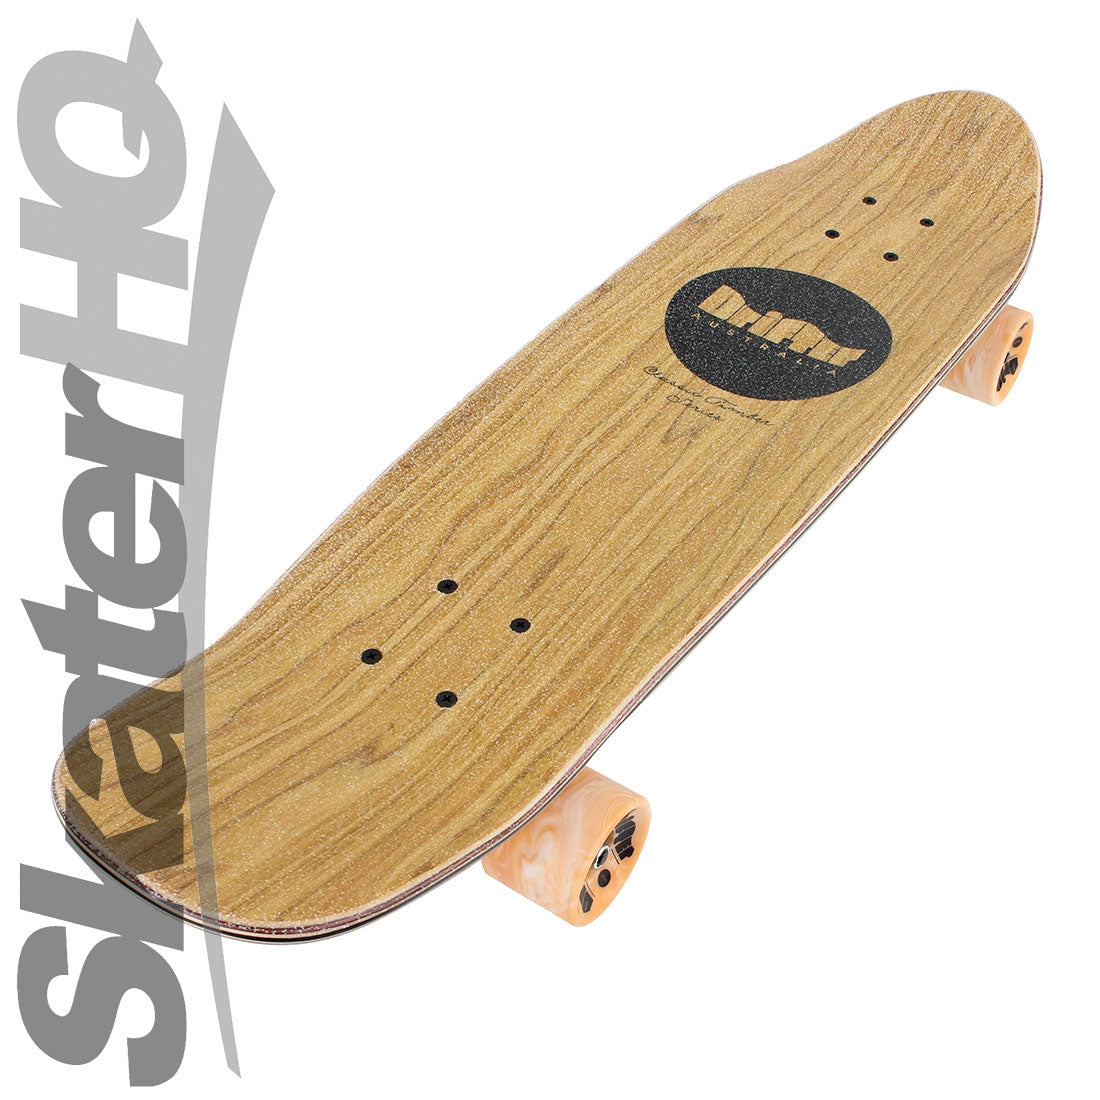 Drifter Midget Barrely 30.75 Complete - Timber Skateboard Compl Cruisers